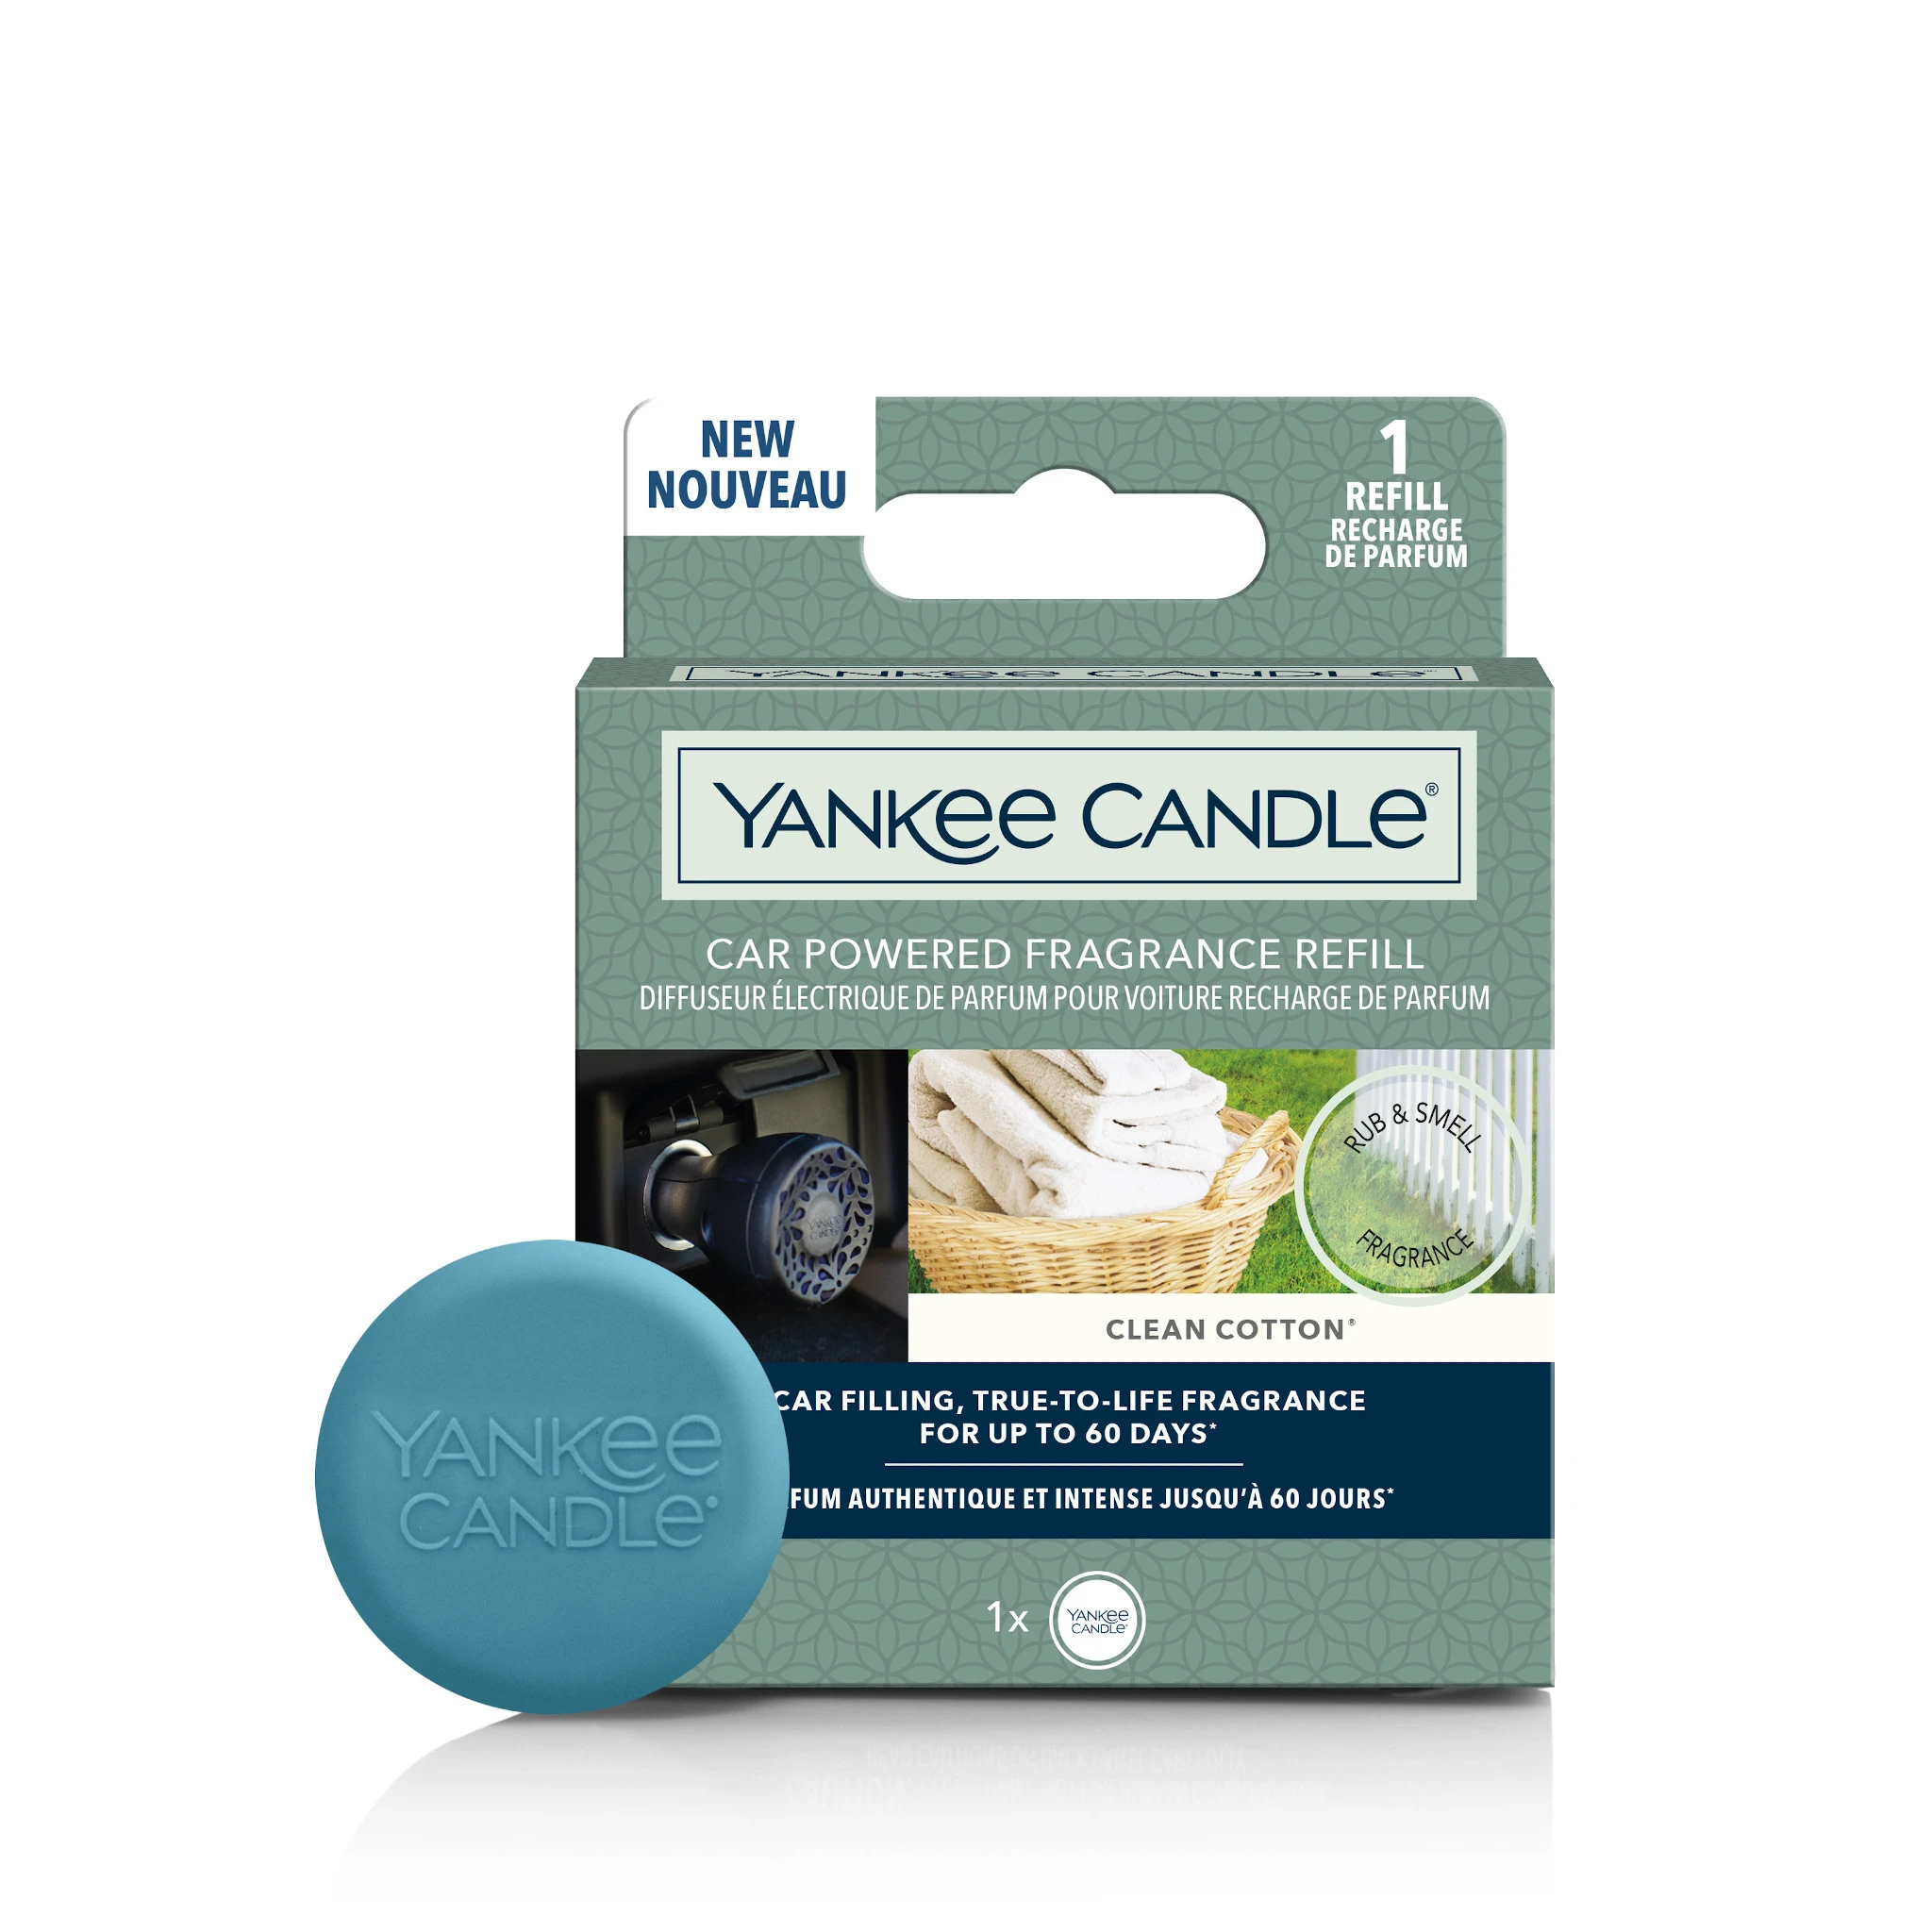 CLEAN COTTON -Yankee Candle- Ricarica di Fragranza per Profumatore Ele –  Candle With Care